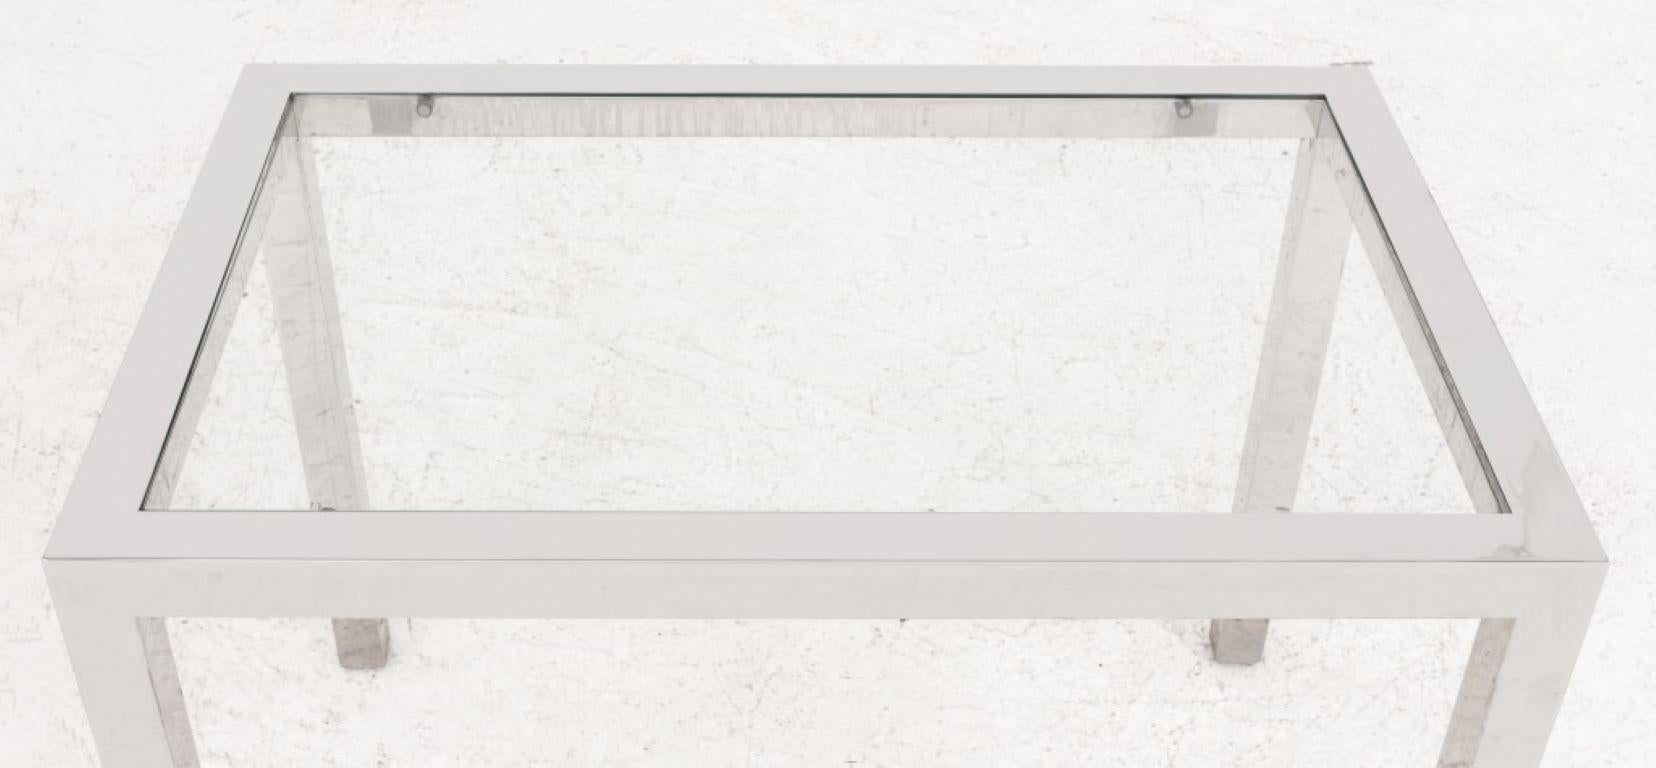 Table basse chromée de style Knoll, mi-siècle moderne Bon état - En vente à New York, NY